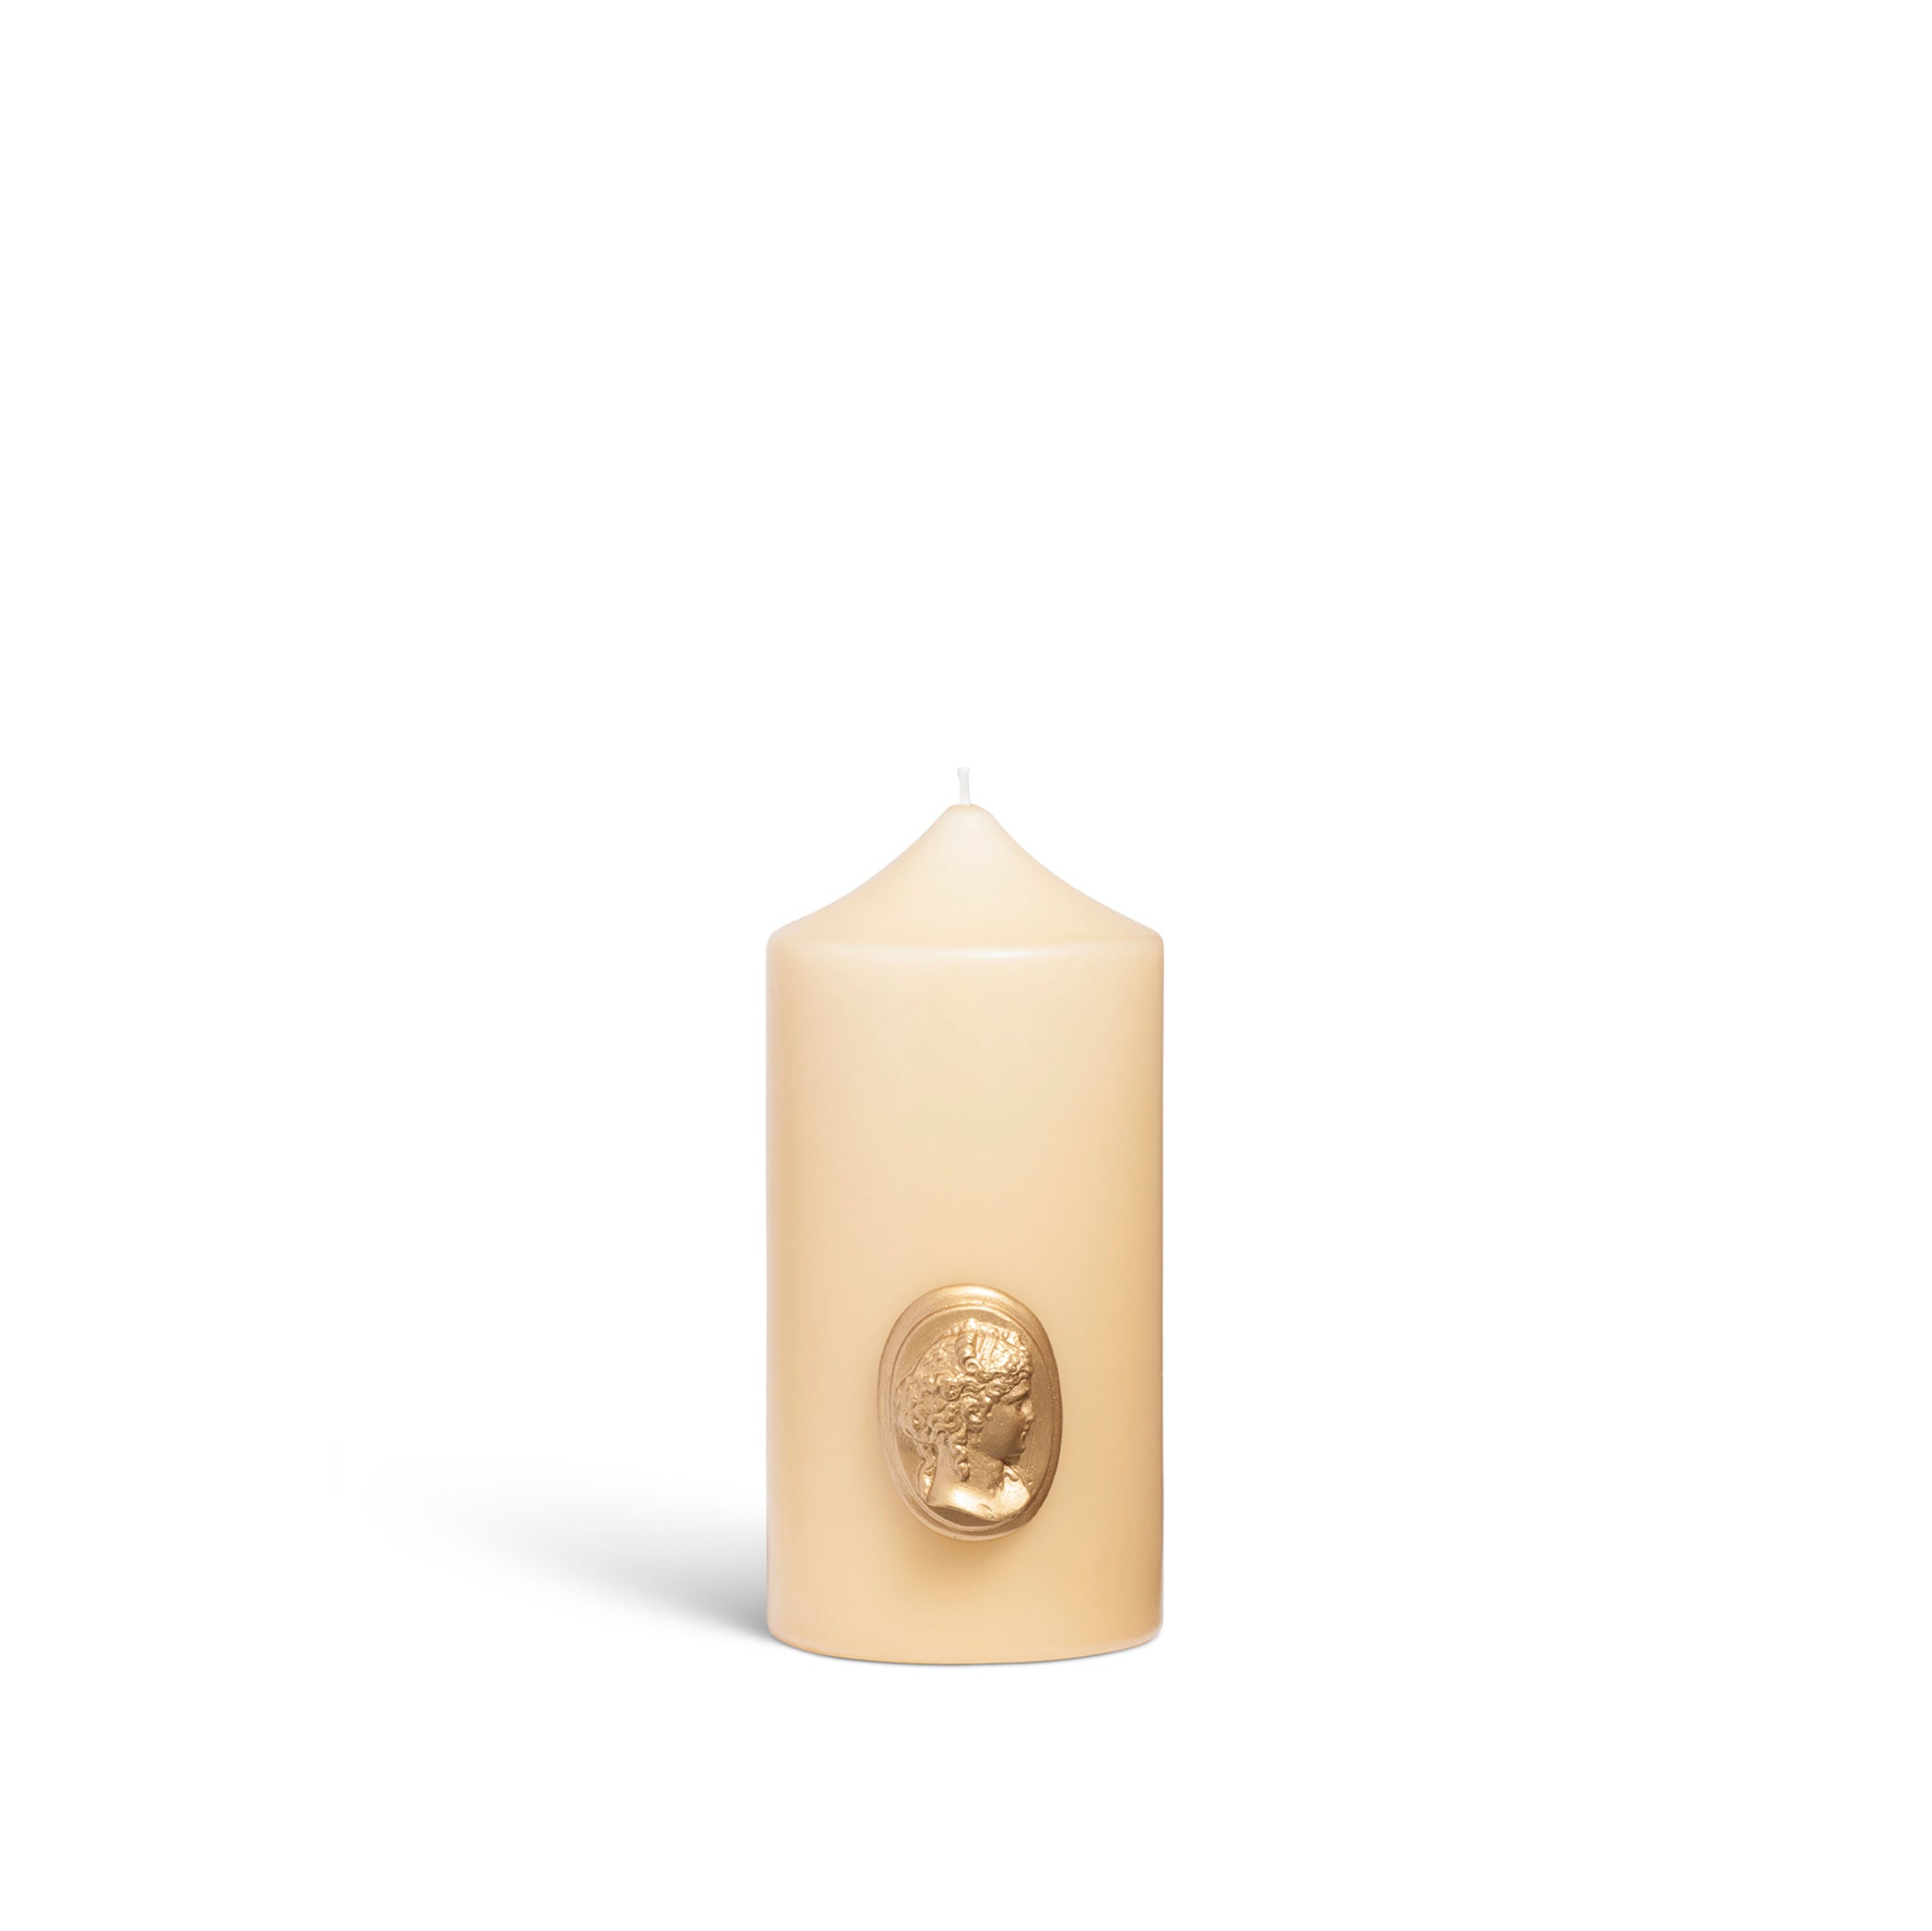 'Madame de Pompadour' Cameo Pillar Candle in Stone, 15cm by Trudon